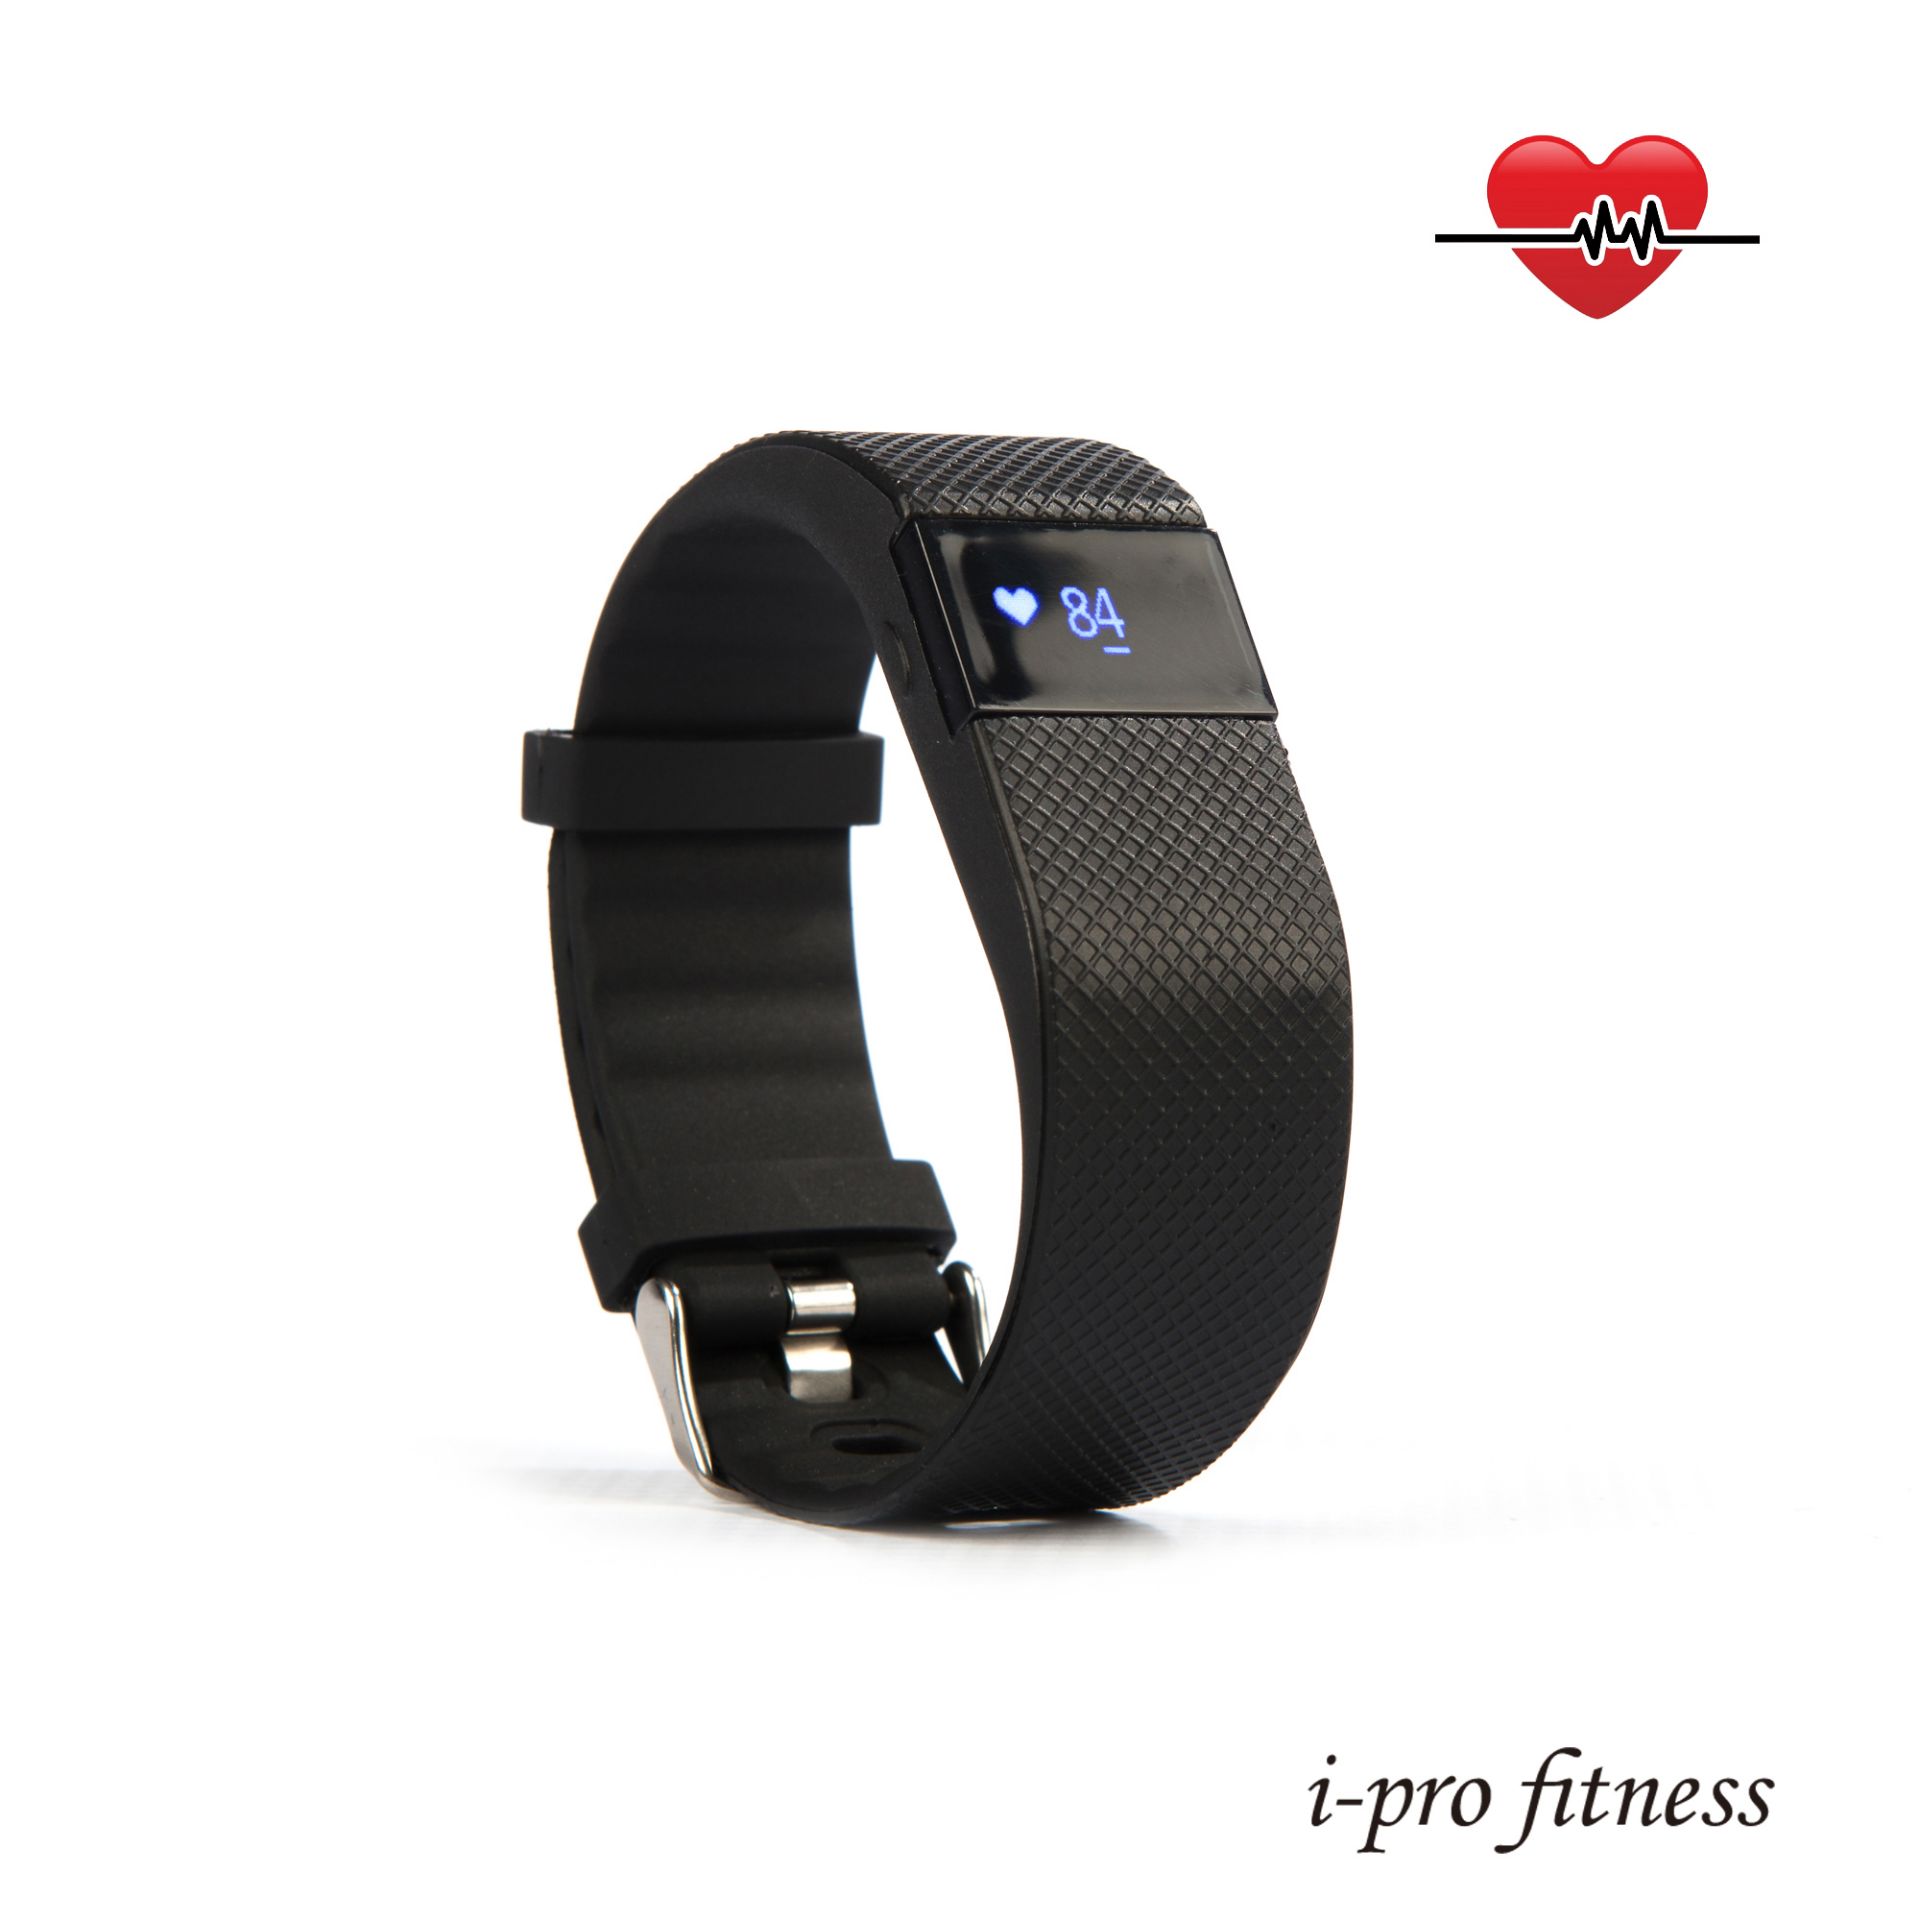 10x Fitness Tracker i-pro fitness, Bluetooth 4.0 Sports Smart Bracelet, Heart Rate Monitor, - Image 4 of 8